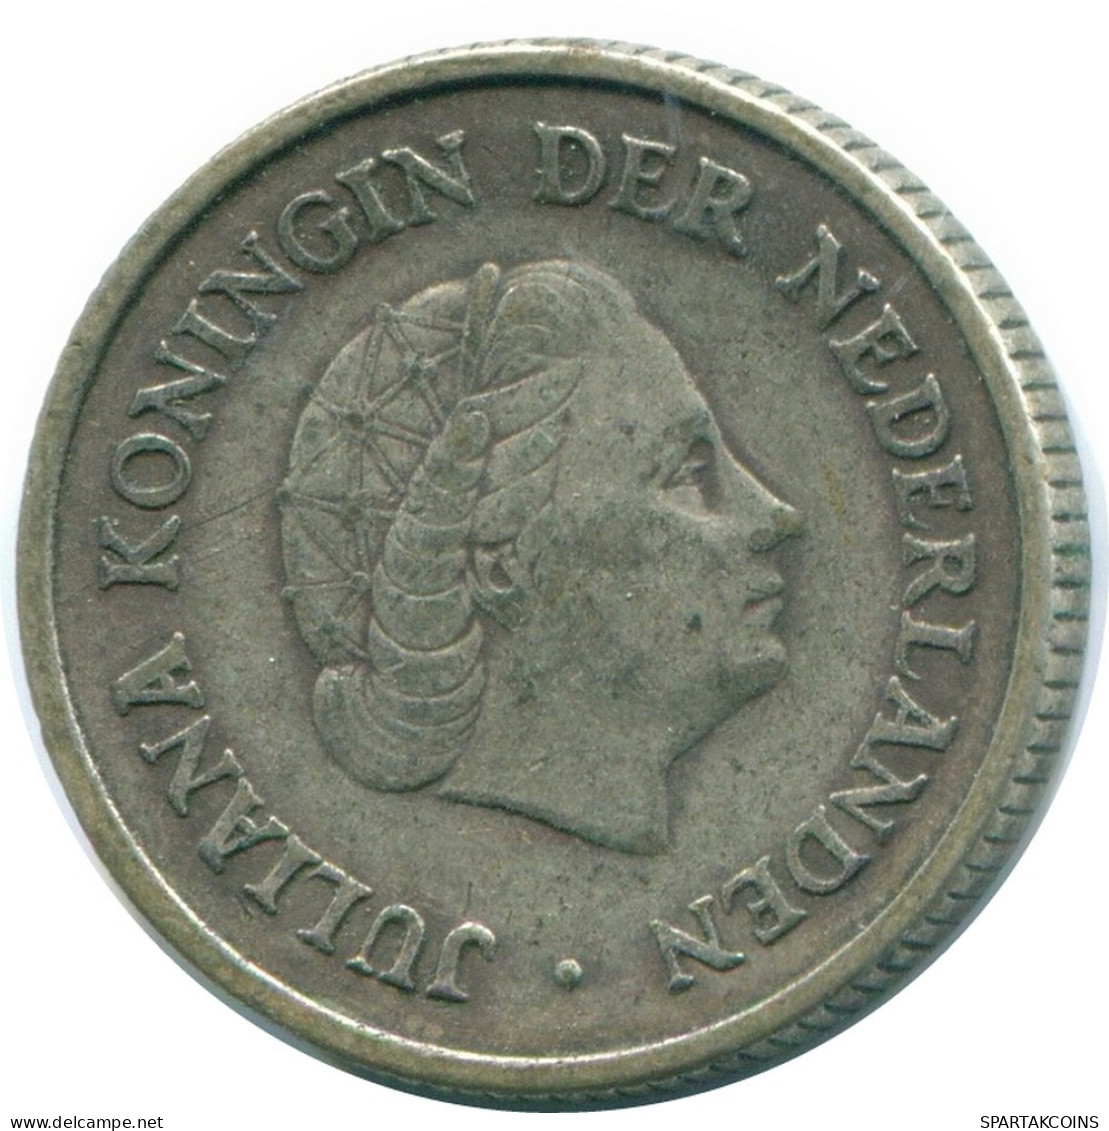 1/4 GULDEN 1954 NETHERLANDS ANTILLES SILVER Colonial Coin #NL10892.4.U.A - Netherlands Antilles